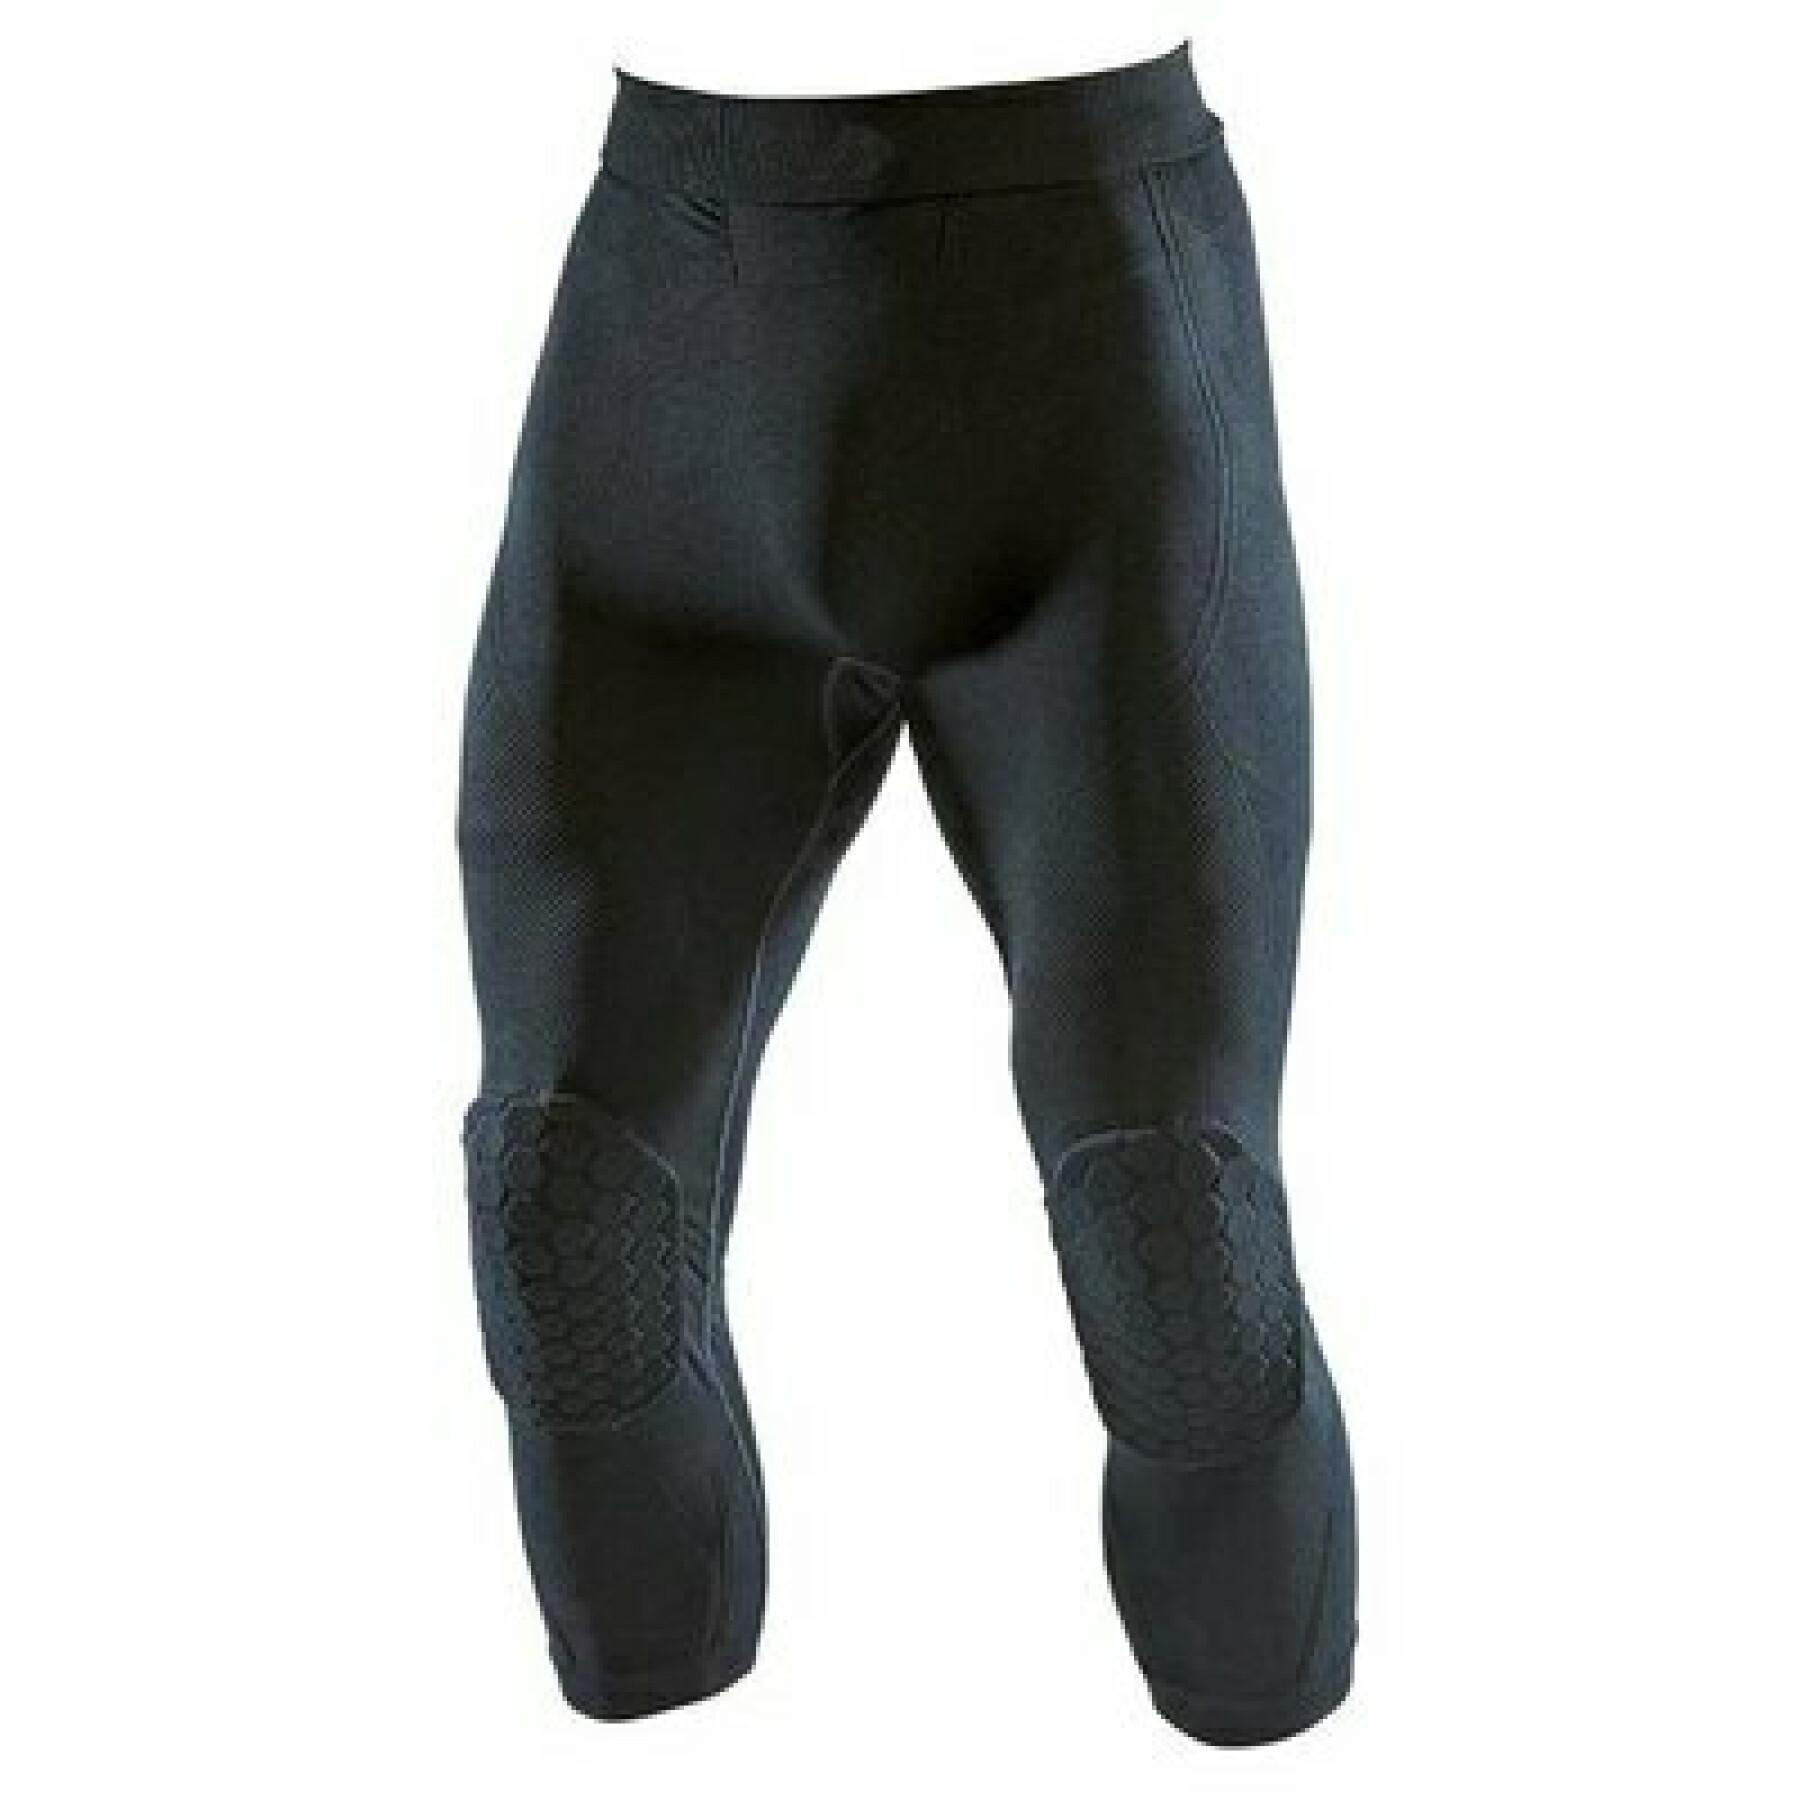 3/4 elite compression pants McDavid Hex 2-pad protège-genoux